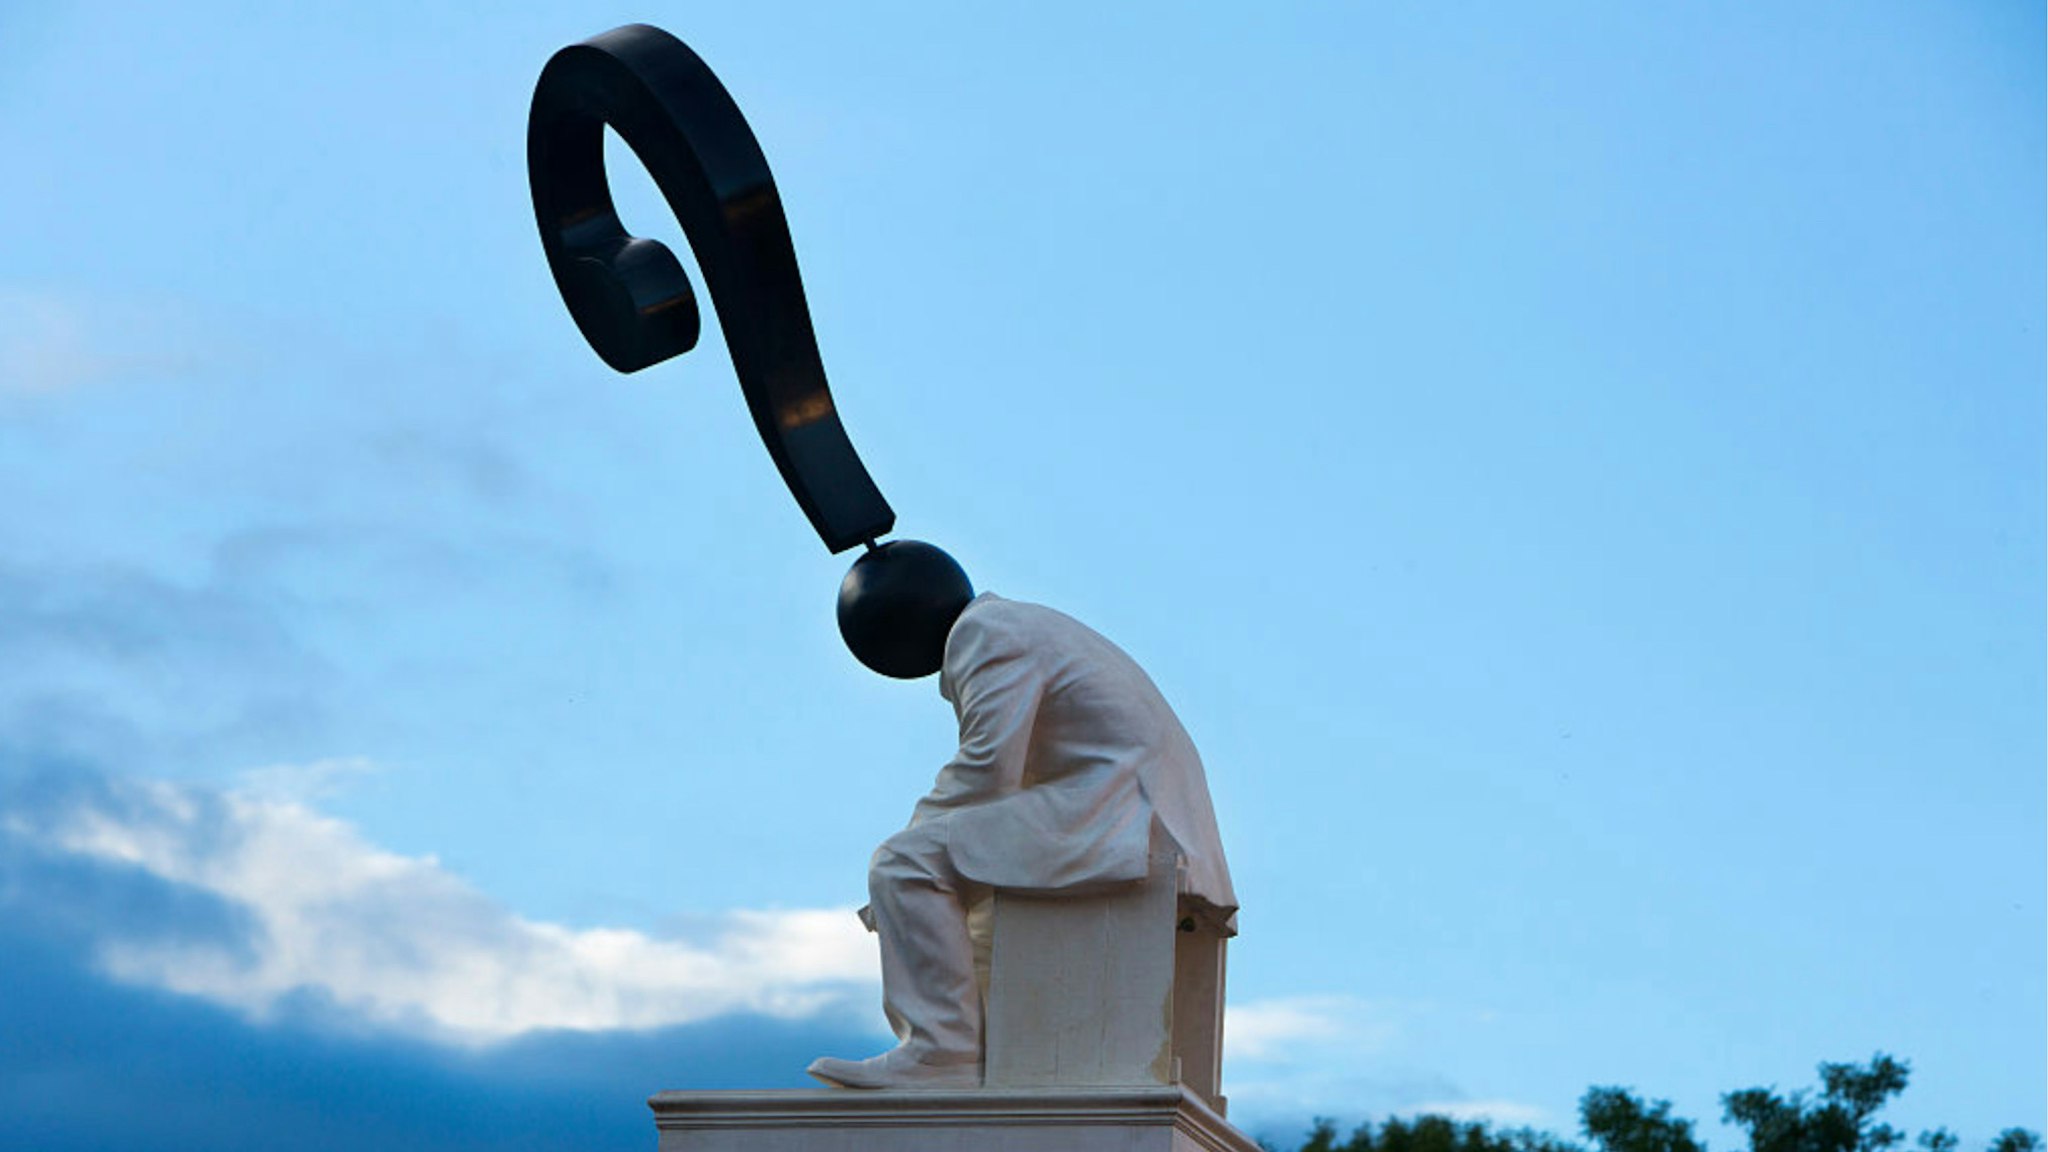 Sculpture by the artist Hugo Farmer greets arrivals to the Shangri La field, Glastonbury Festival, United Kingdom.